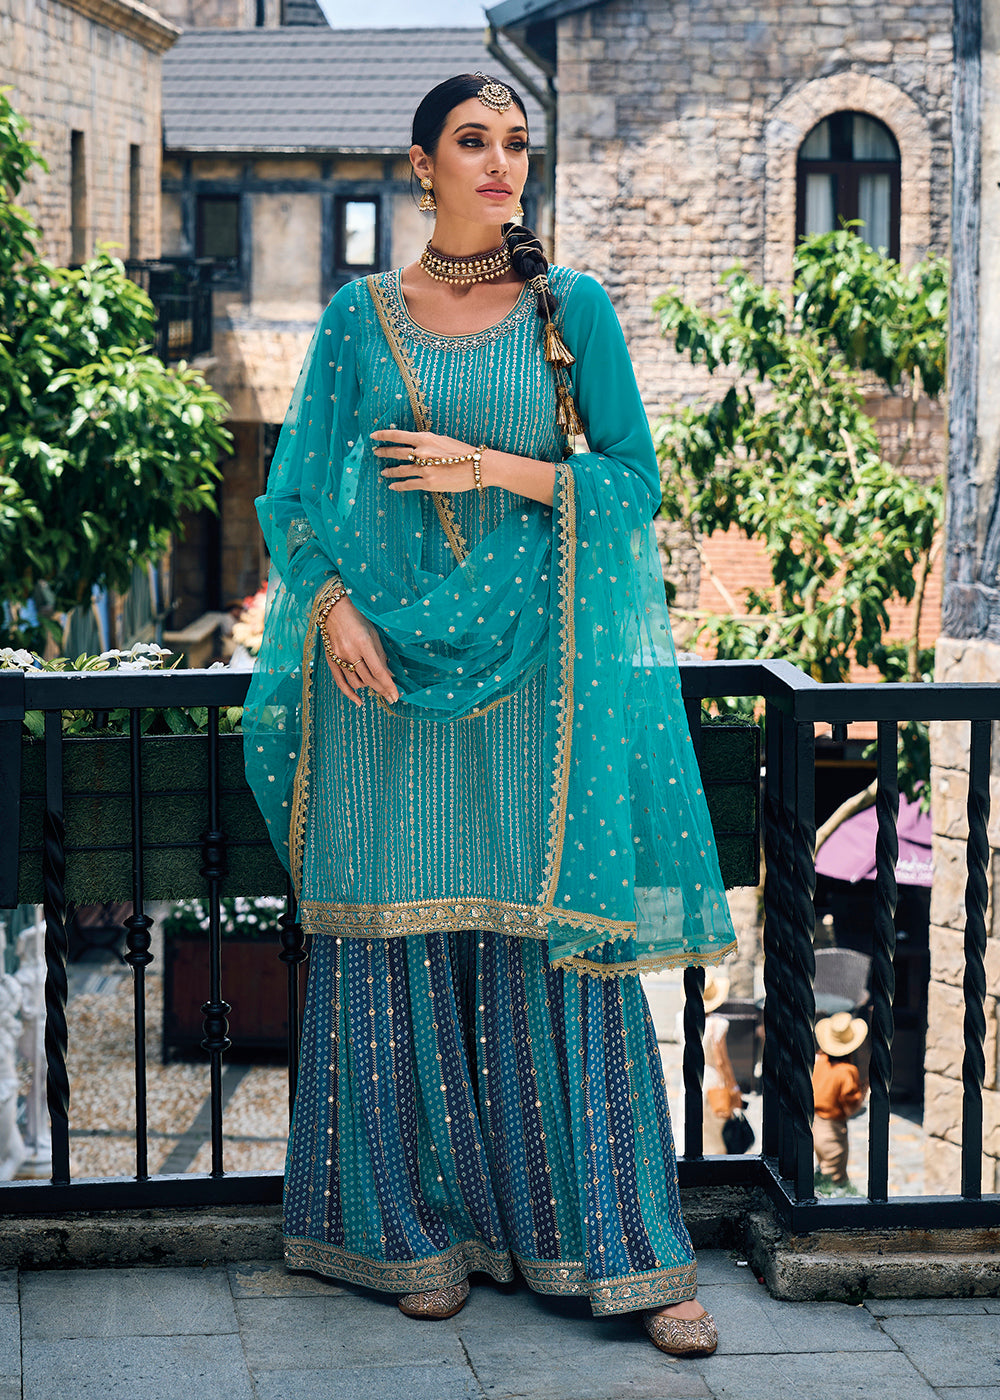 Buy Now Punjabi Style Turquoise Embroidered Designer Palazzo Suit Online in USA, UK, Canada, Germany, Australia & Worldwide at Empress Clothing.